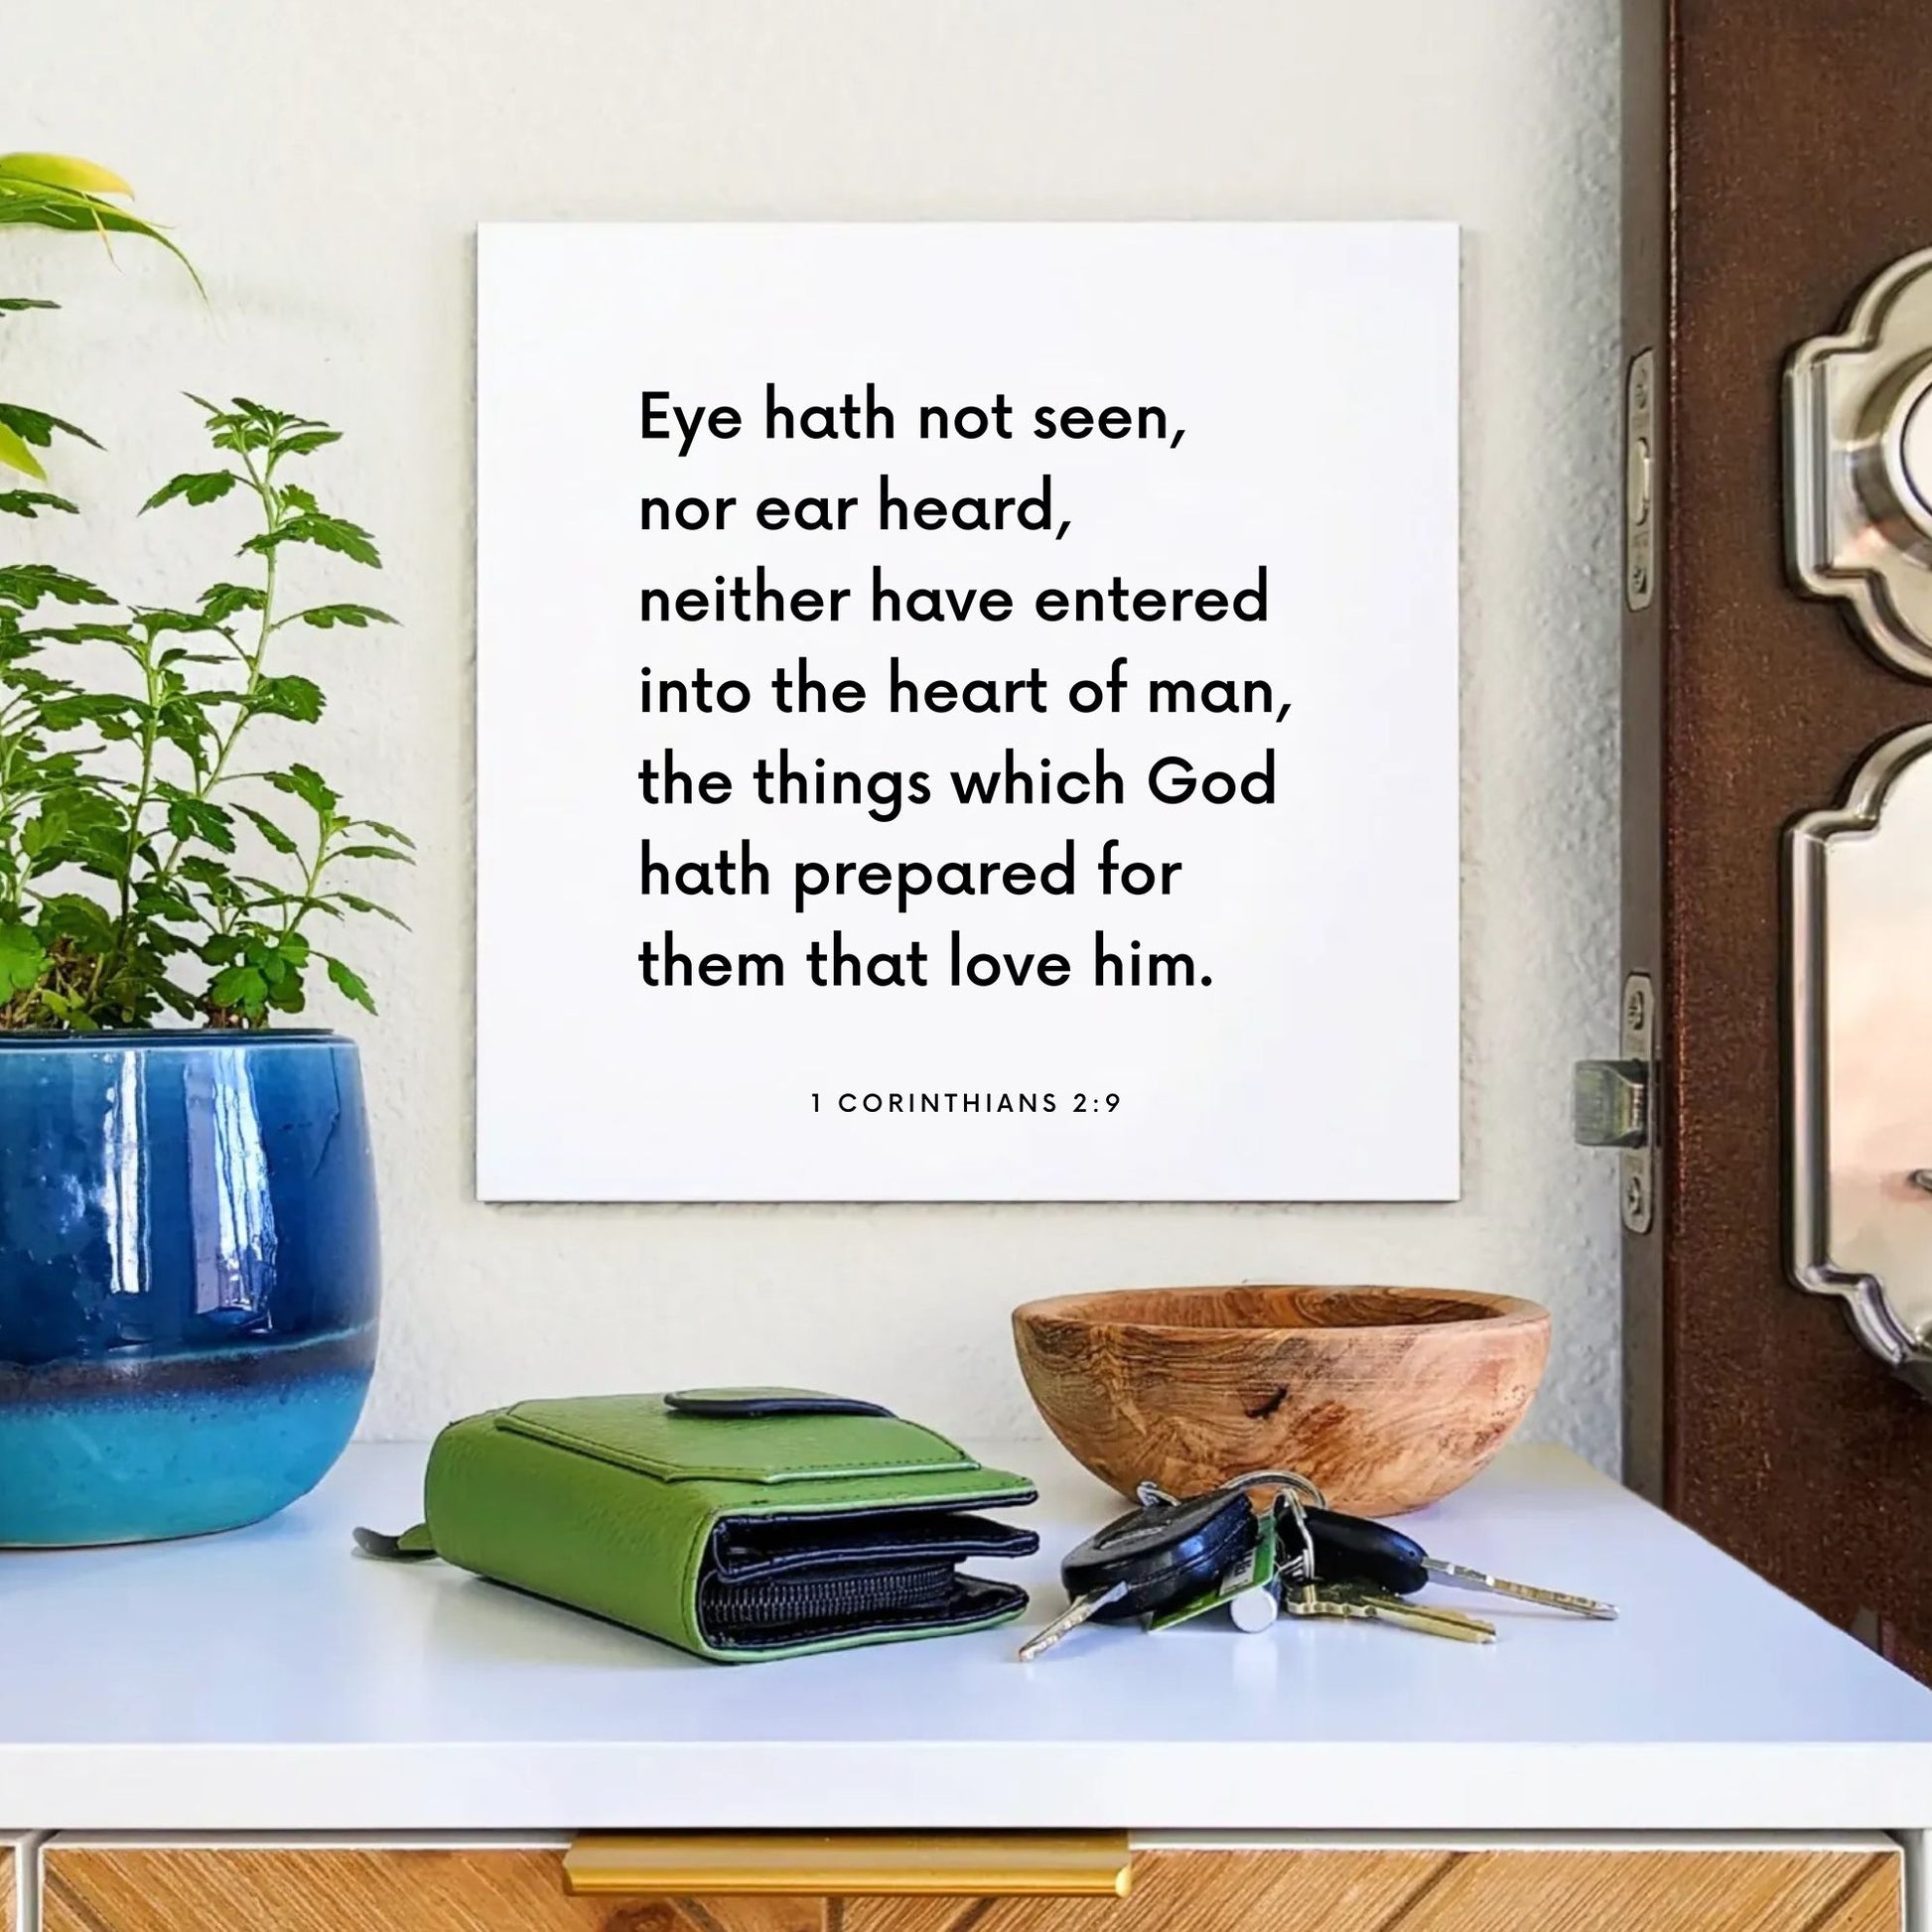 Entryway mouting of the scripture tile for 1 Corinthians 2:9 - "Eye hath not seen, nor ear heard"